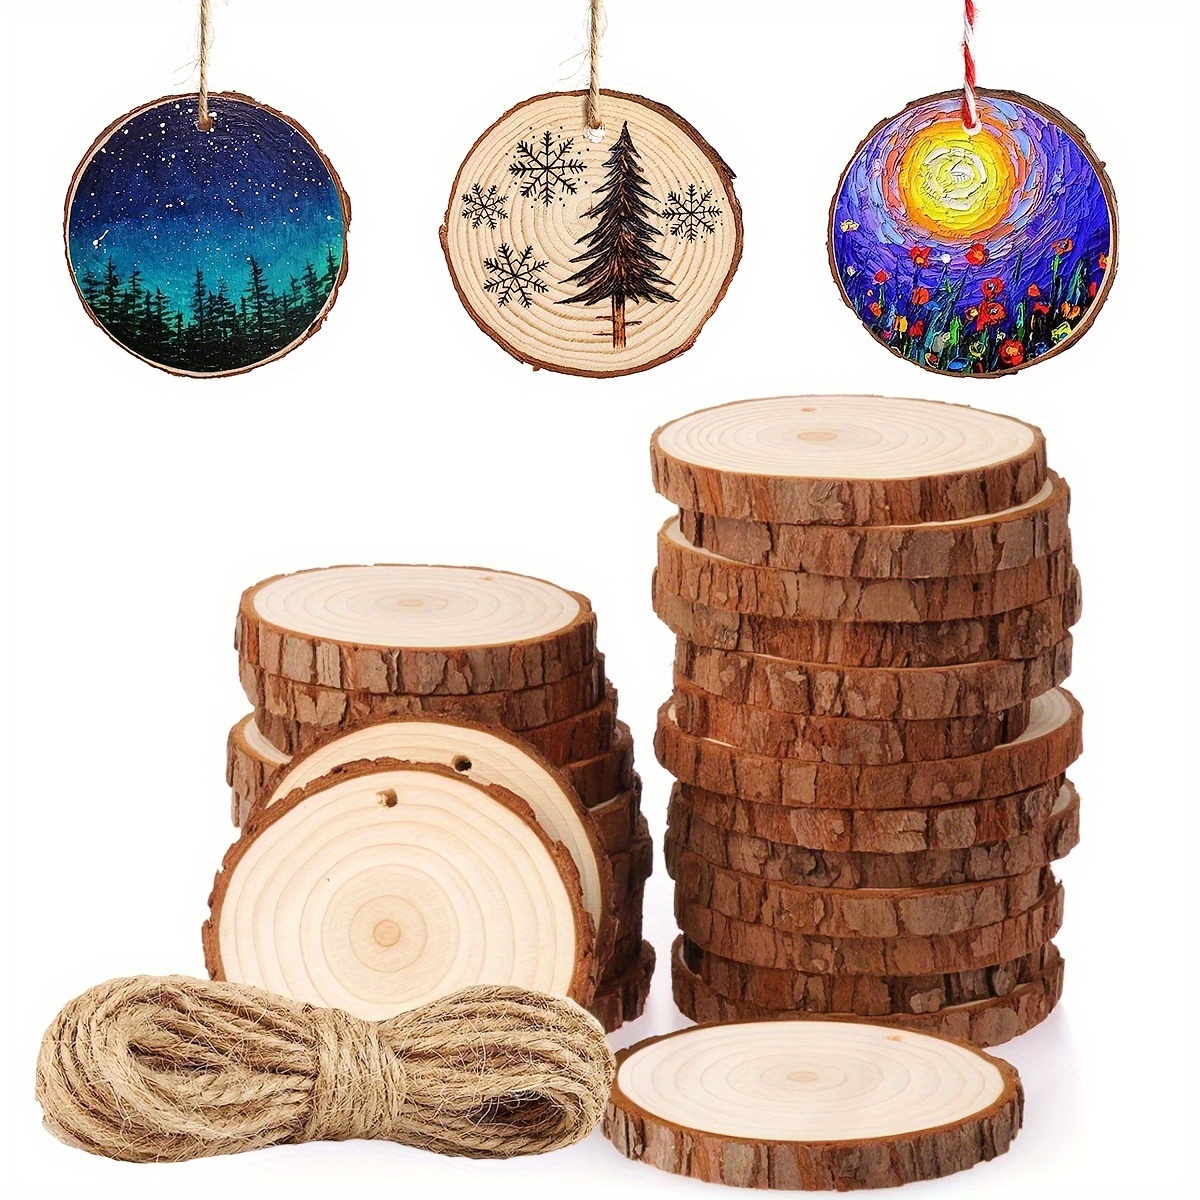 14cm-16cm Natural Wood Log Slices Tree Bark Wooden Circles Set of 4